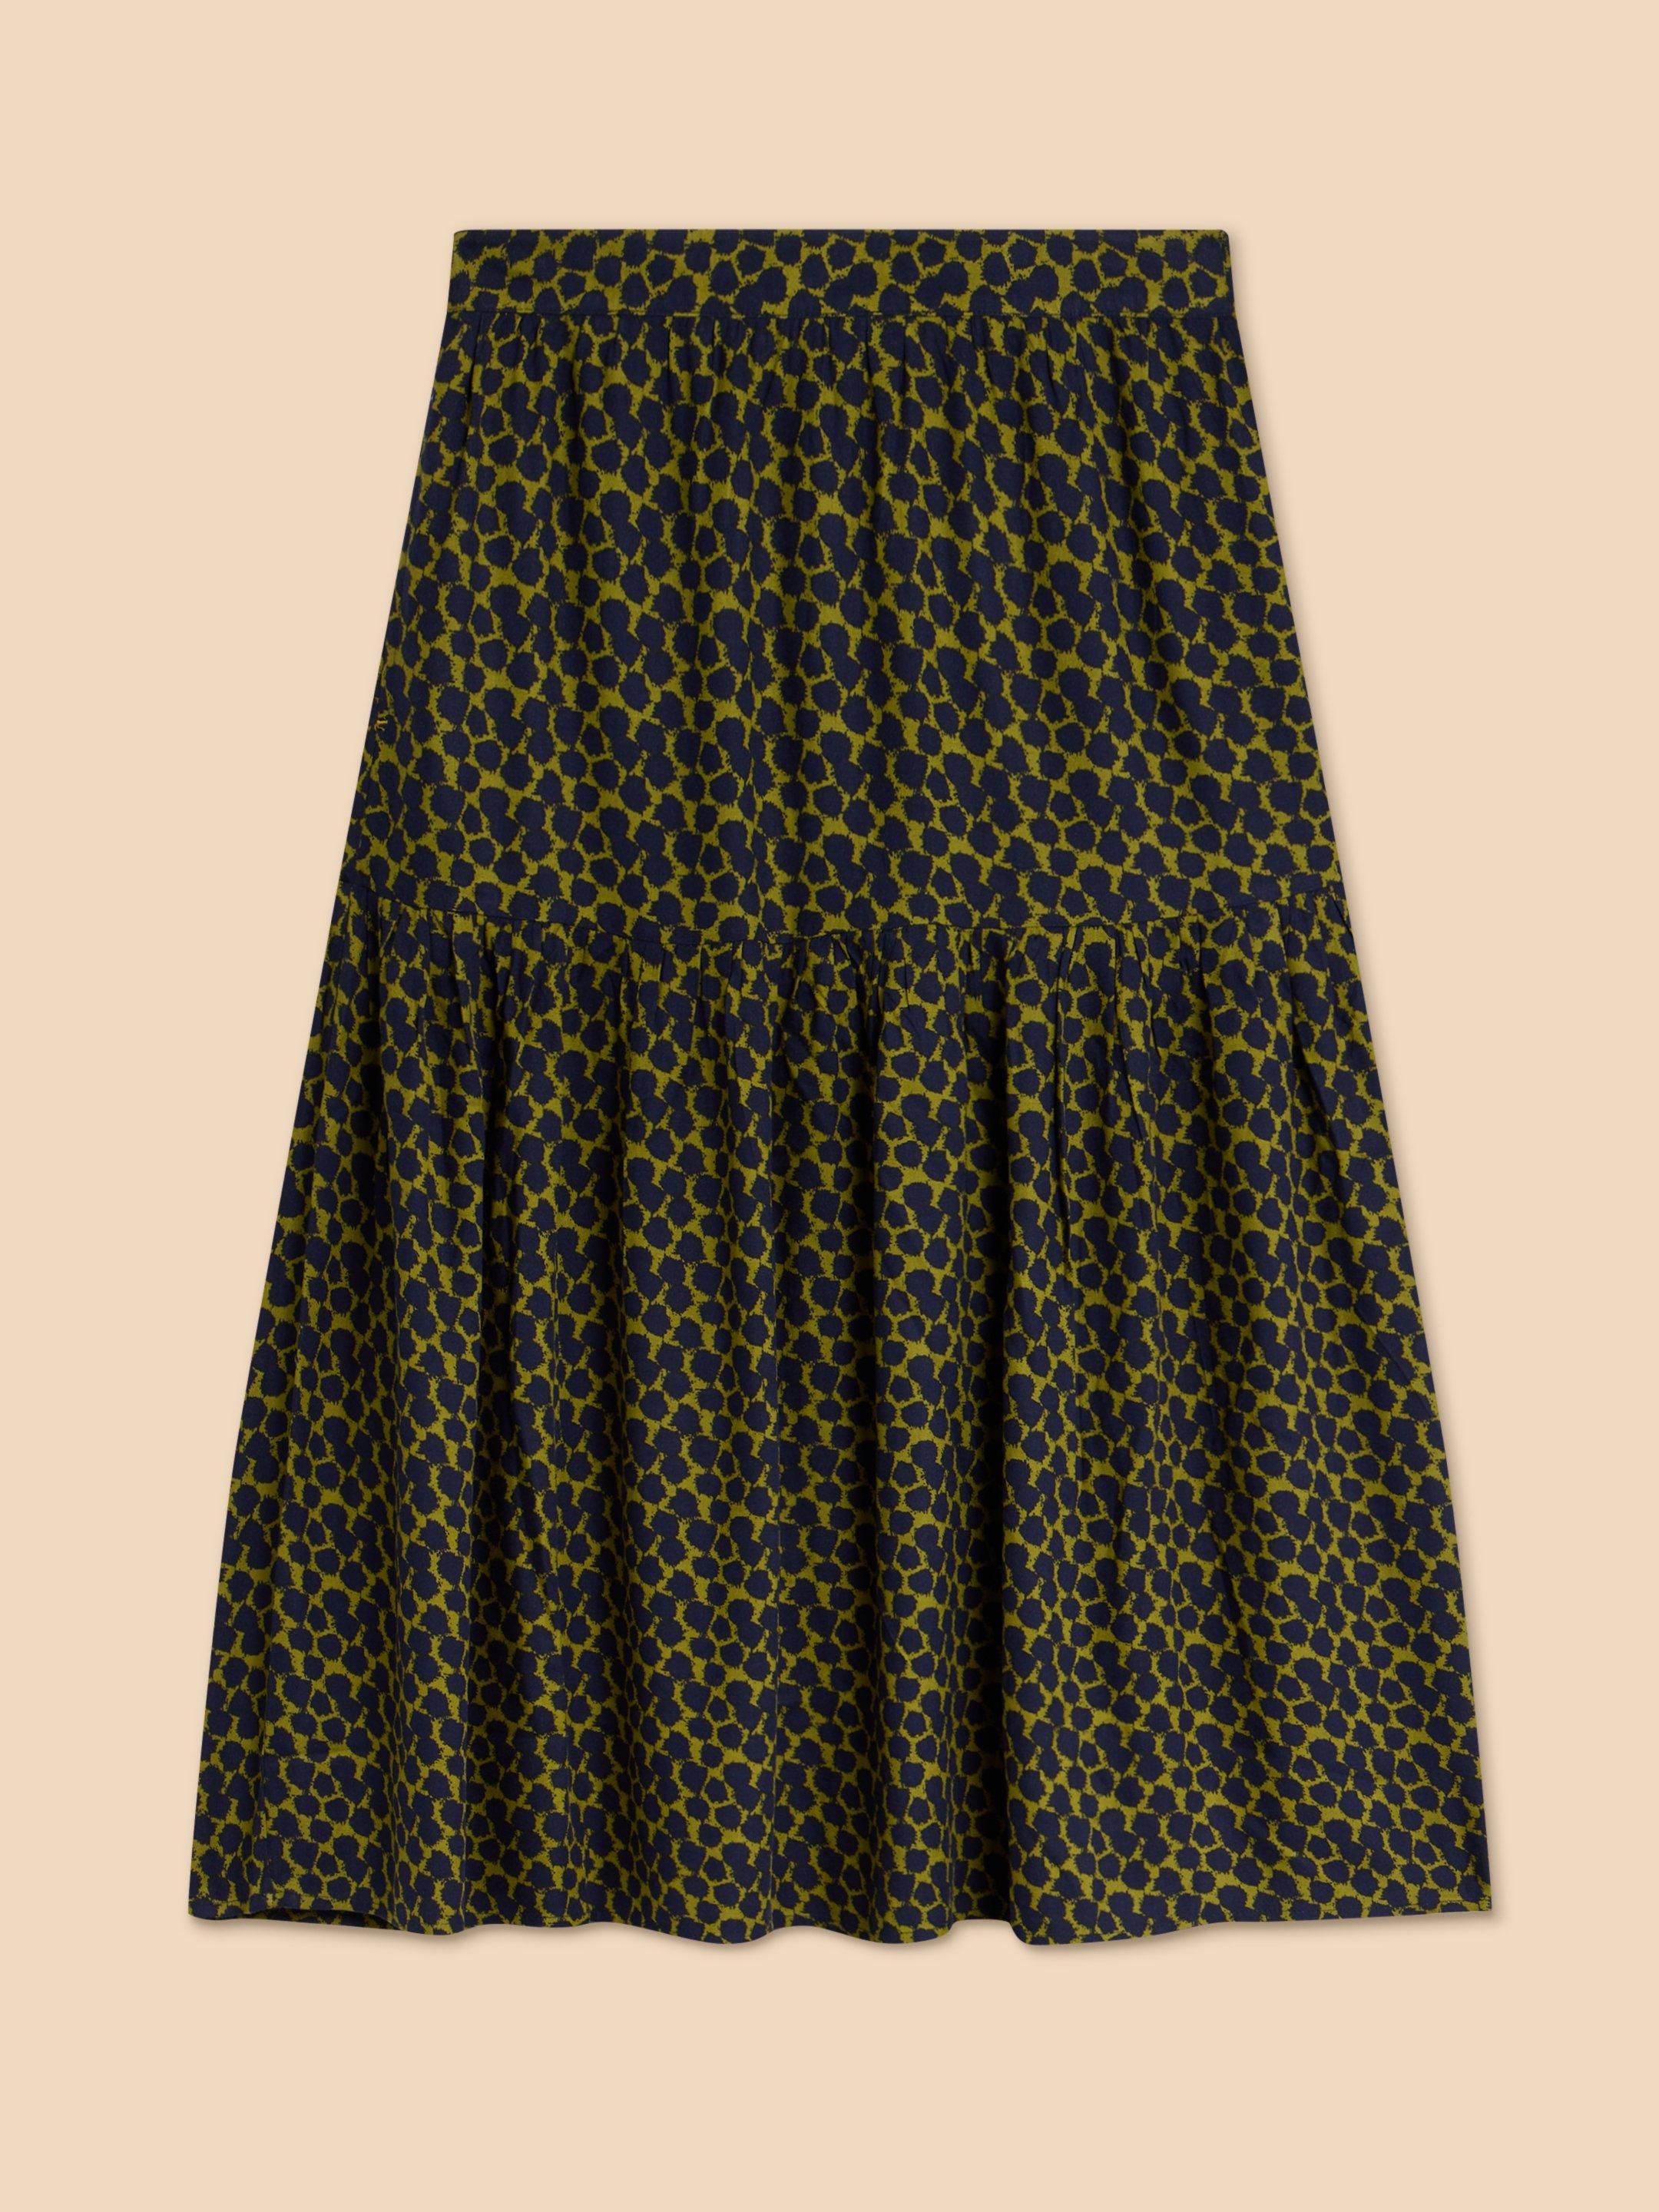 Jamima Eco Vero Skirt in NAVY MULTI - FLAT FRONT